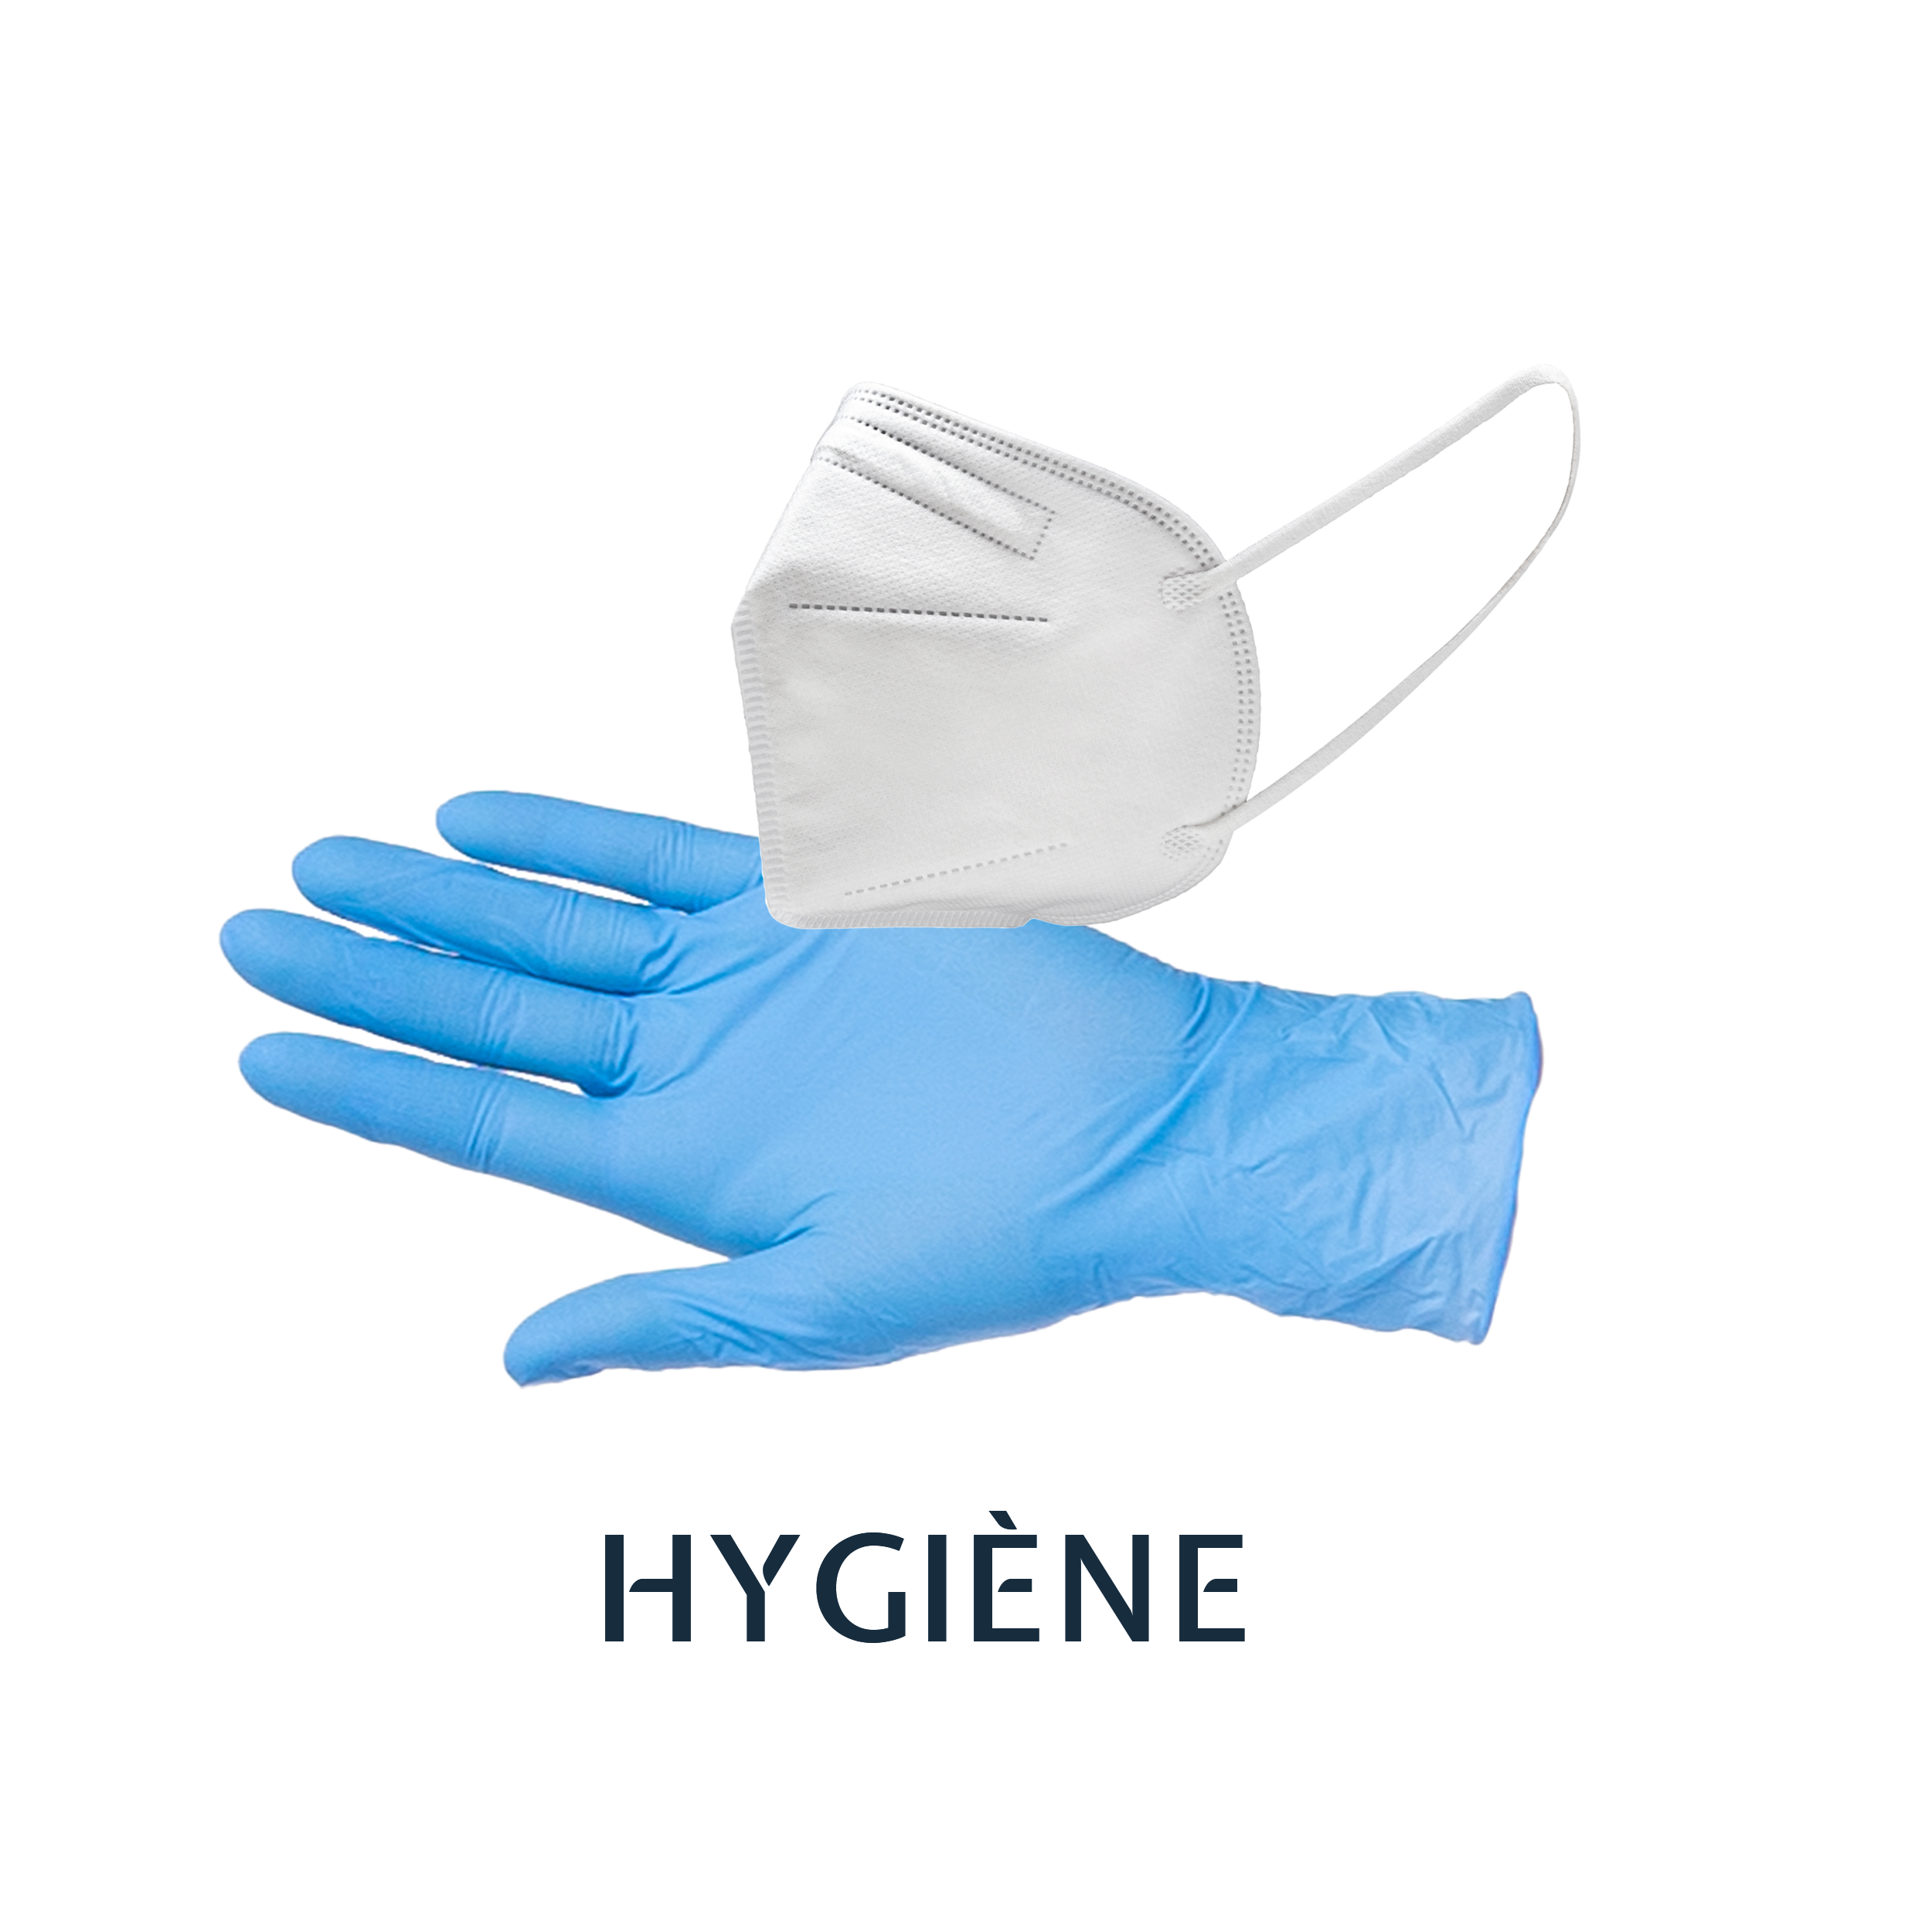 Hygiene_portfolio_FR